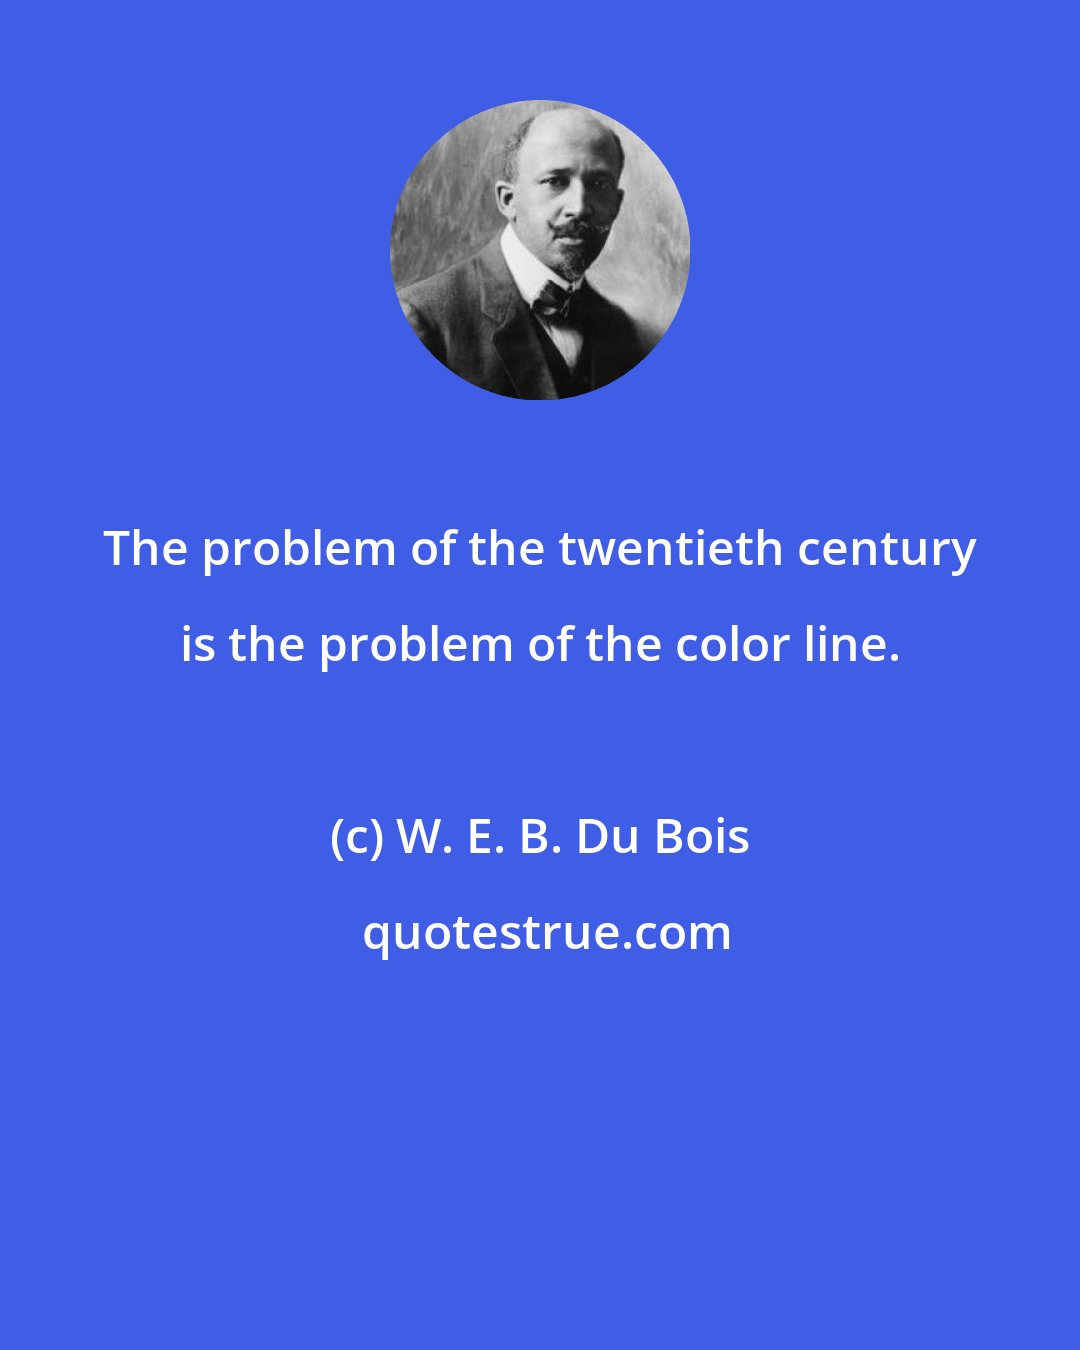 W. E. B. Du Bois: The problem of the twentieth century is the problem of the color line.